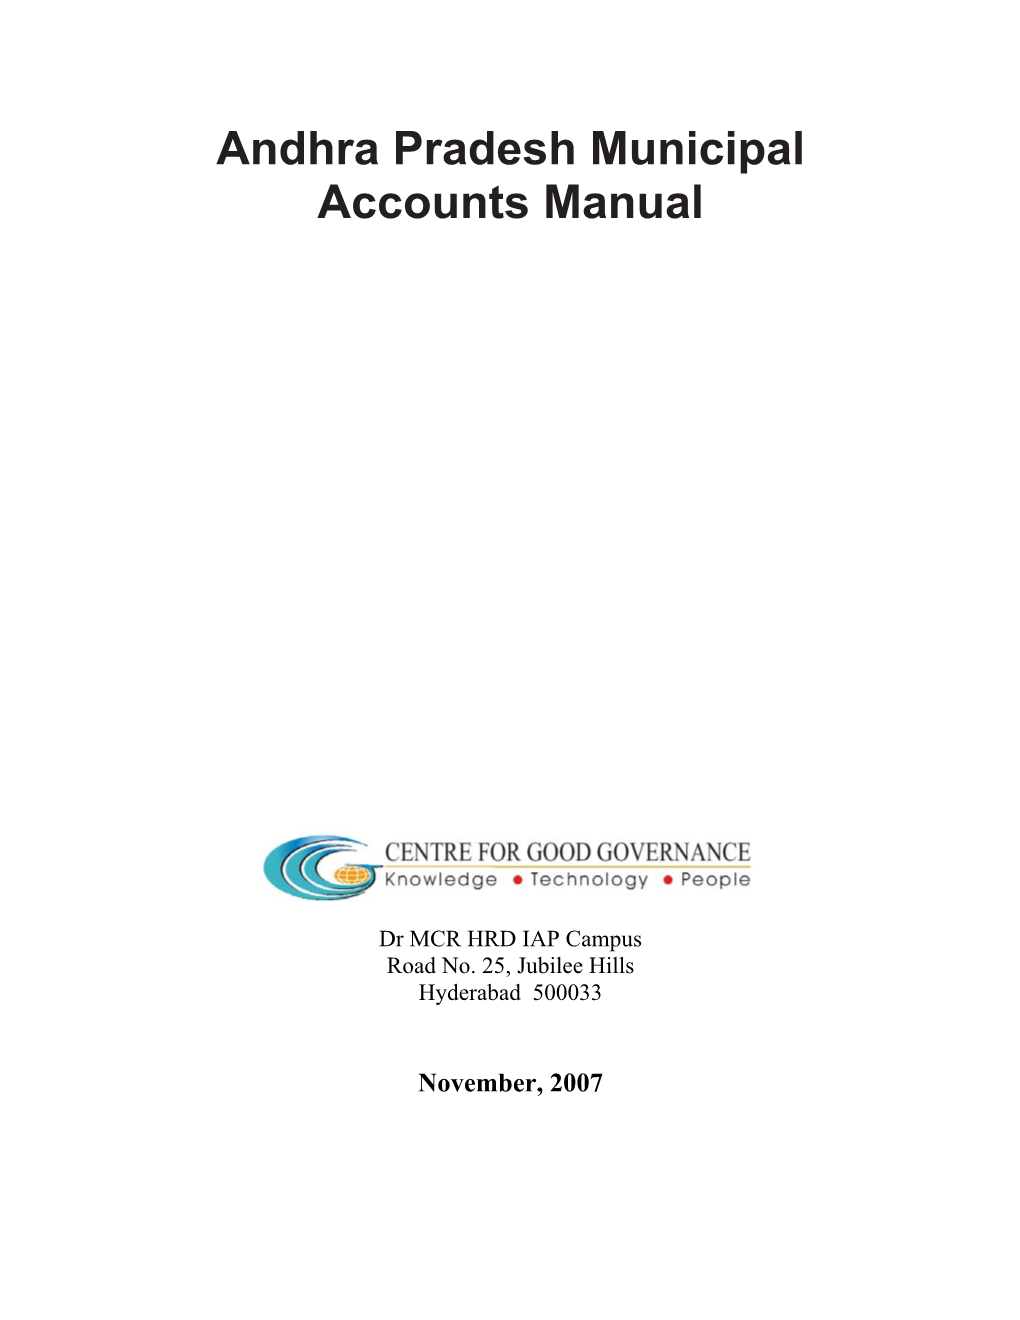 Andhra Pradesh Municipal Accounts Manual